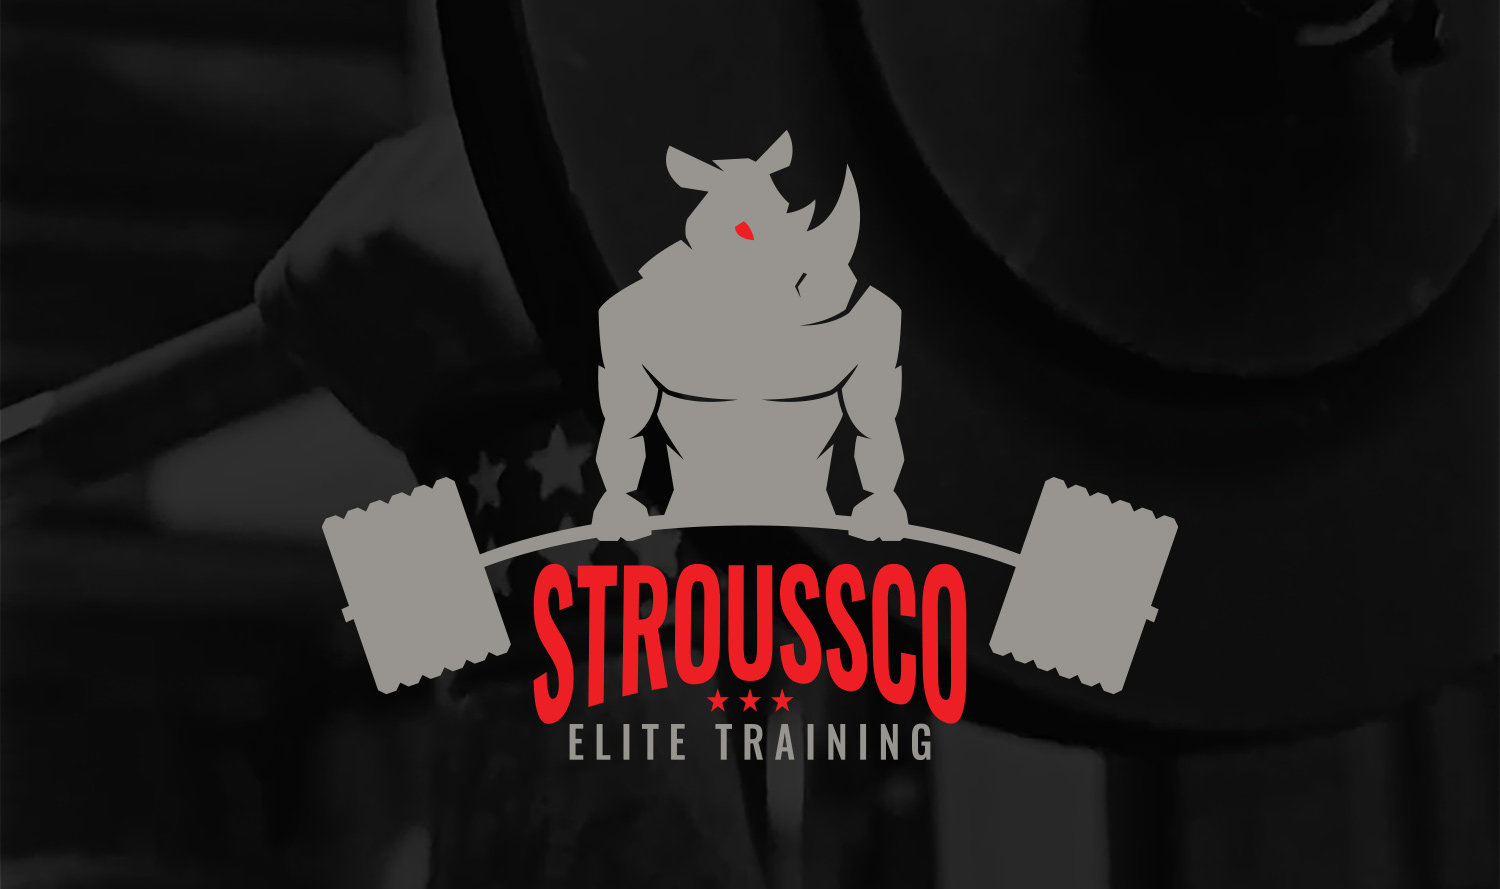 Stroussco Elite Training